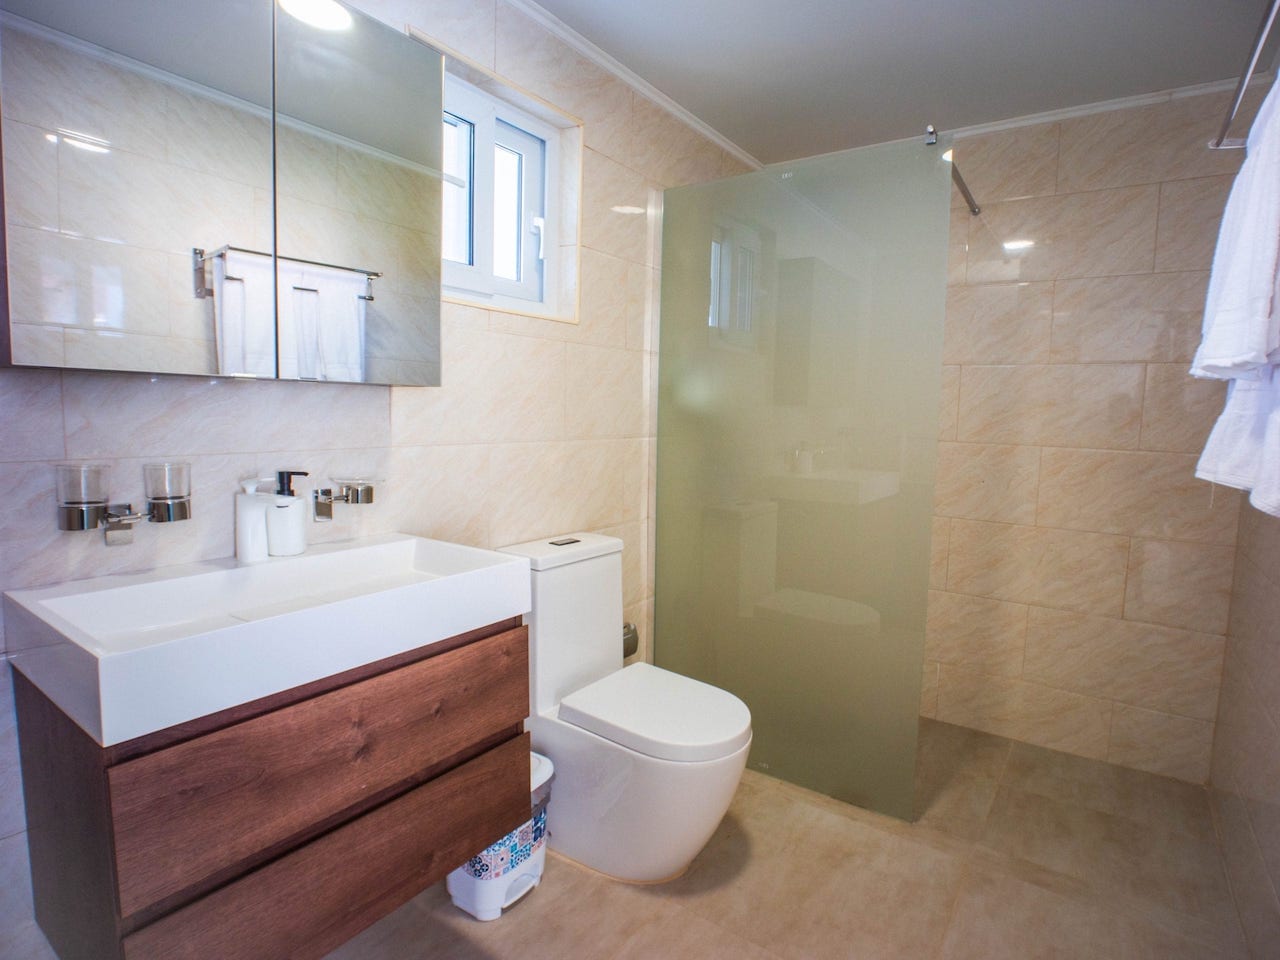 Furnished Studio In Coastal Gated Community interior full bath with shower